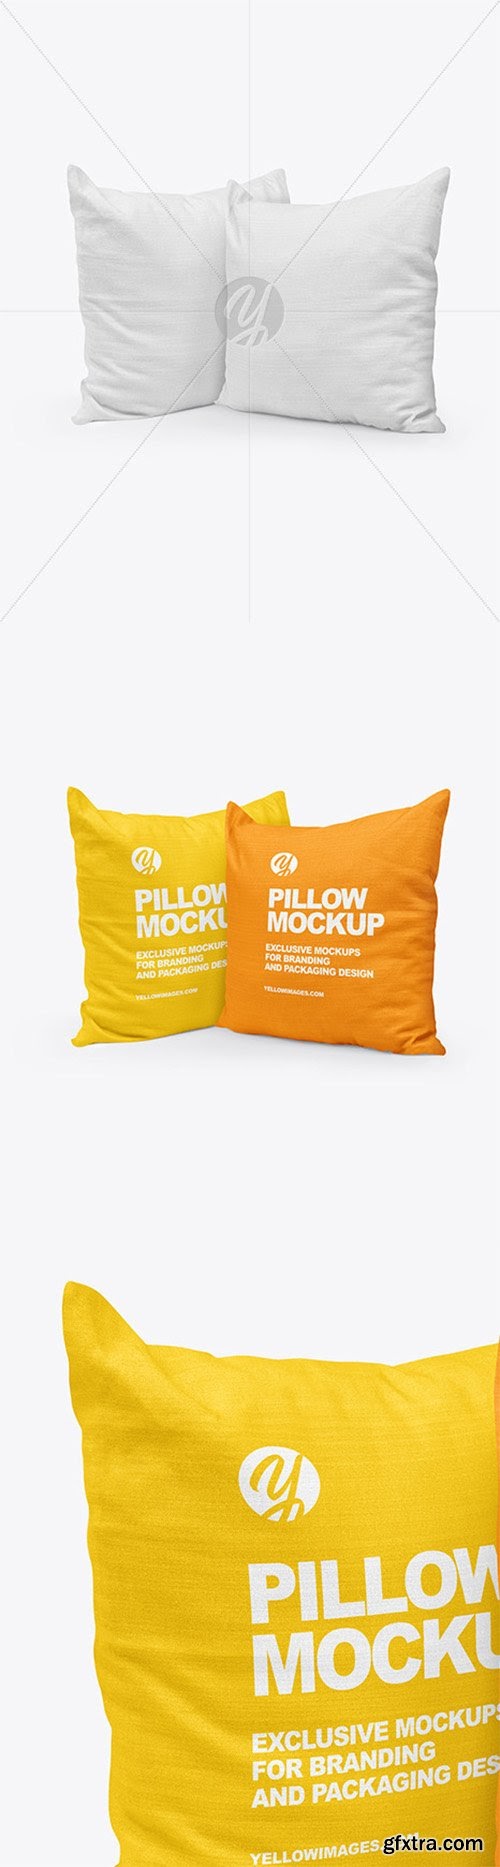 Download Throw Blanket Mockup Free - Free PSD Mockups